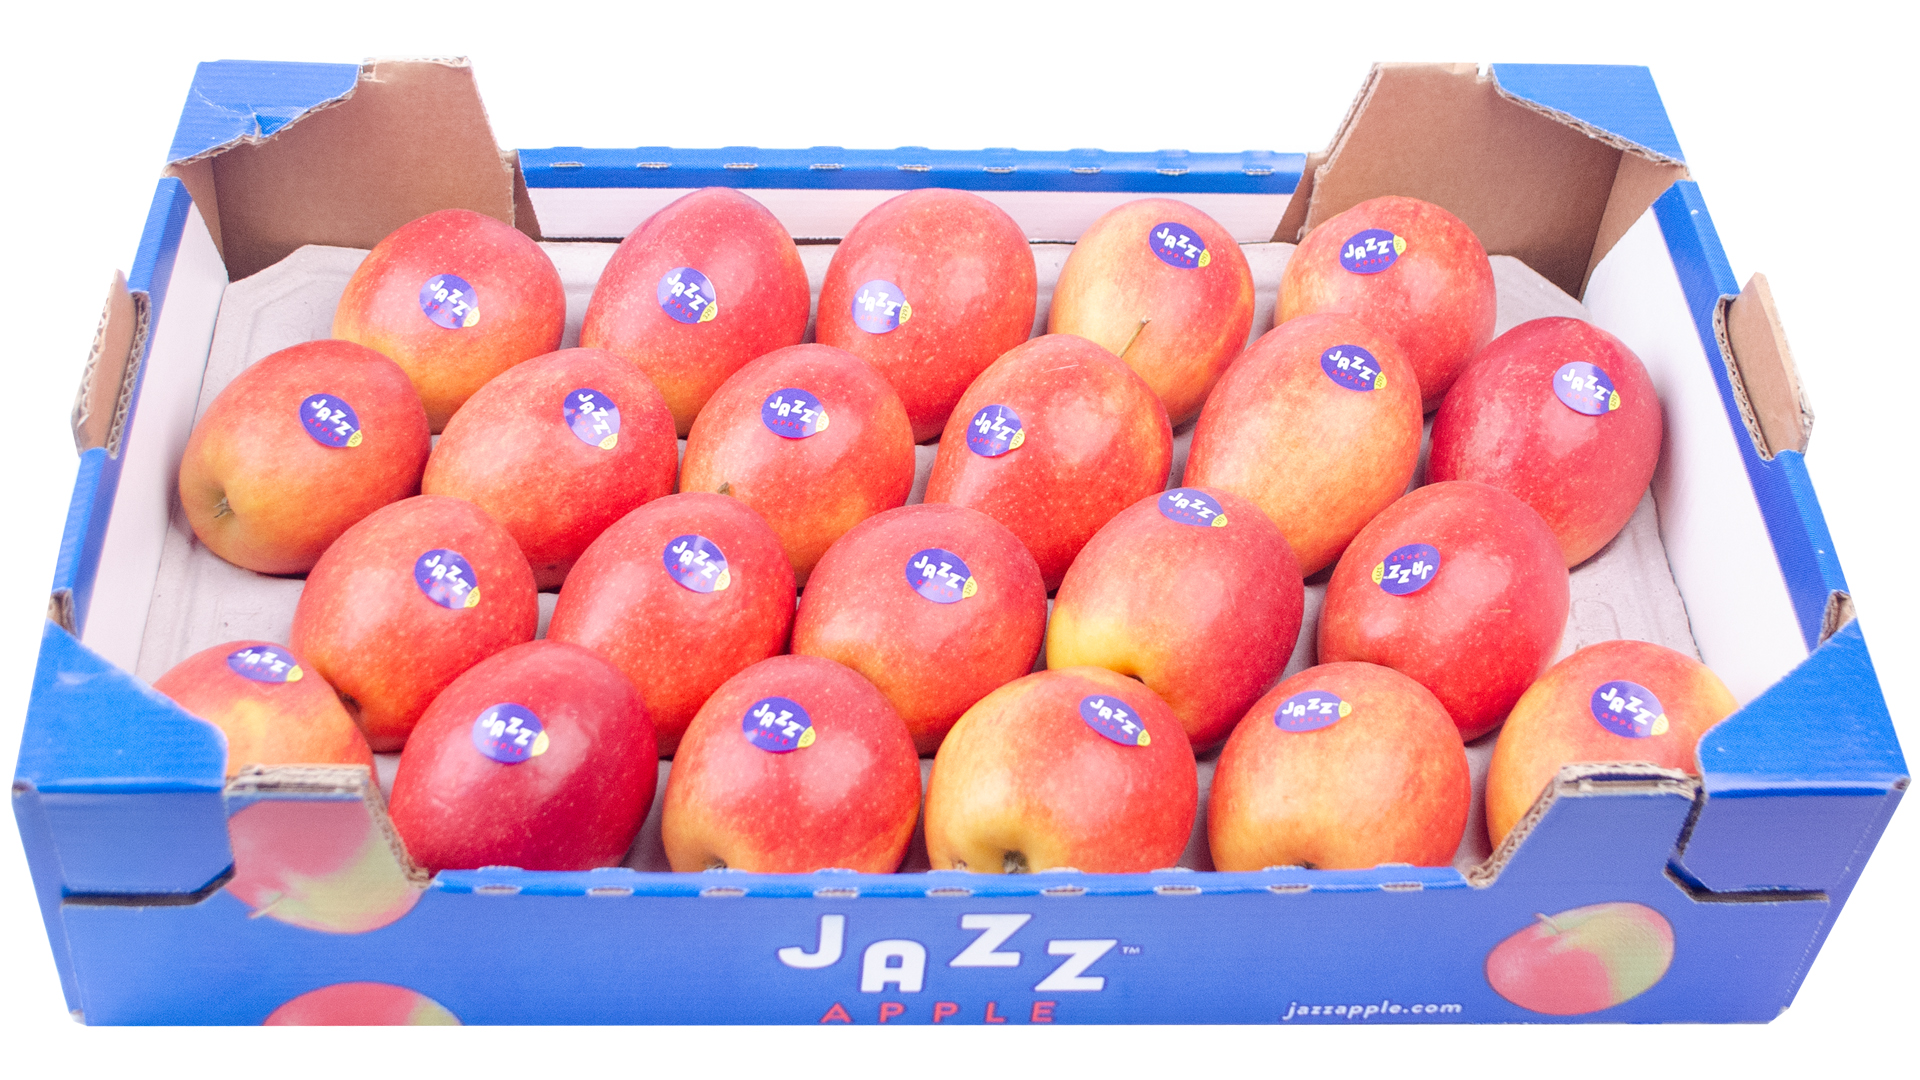 Apfel Jazz